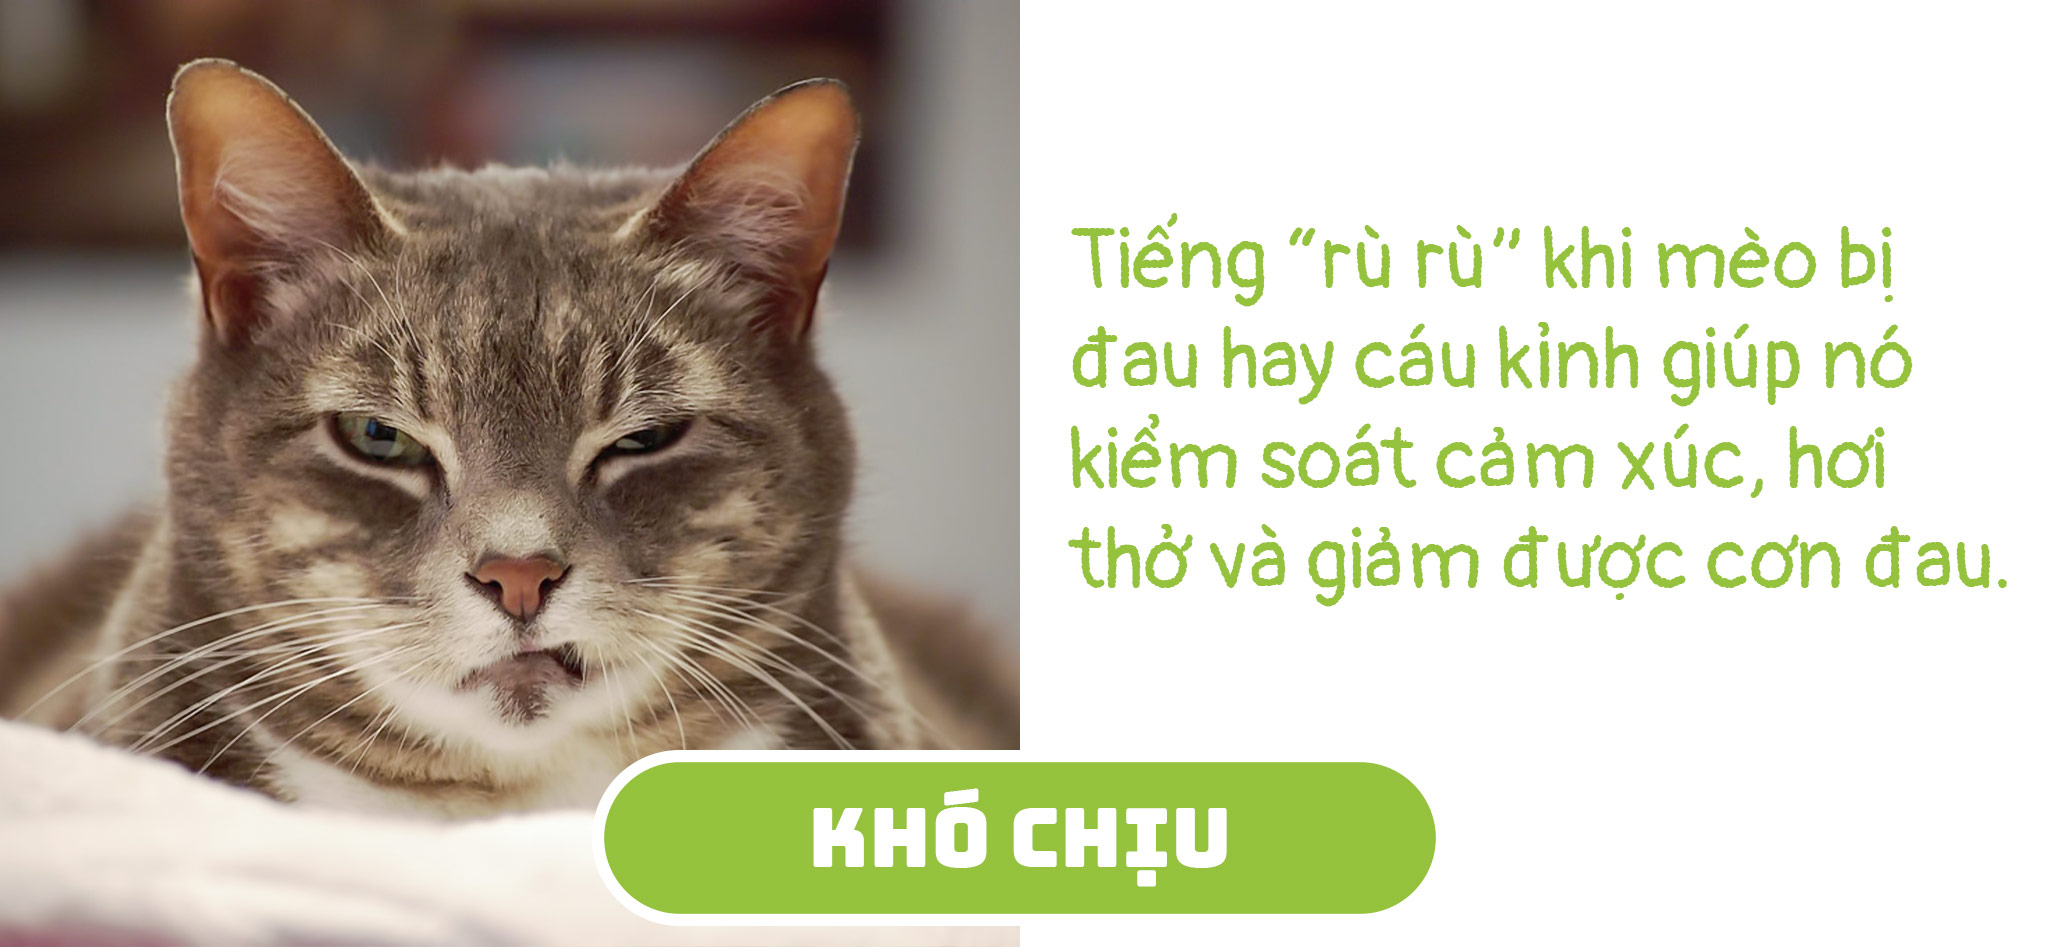 tinhte_cat_info1.jpg